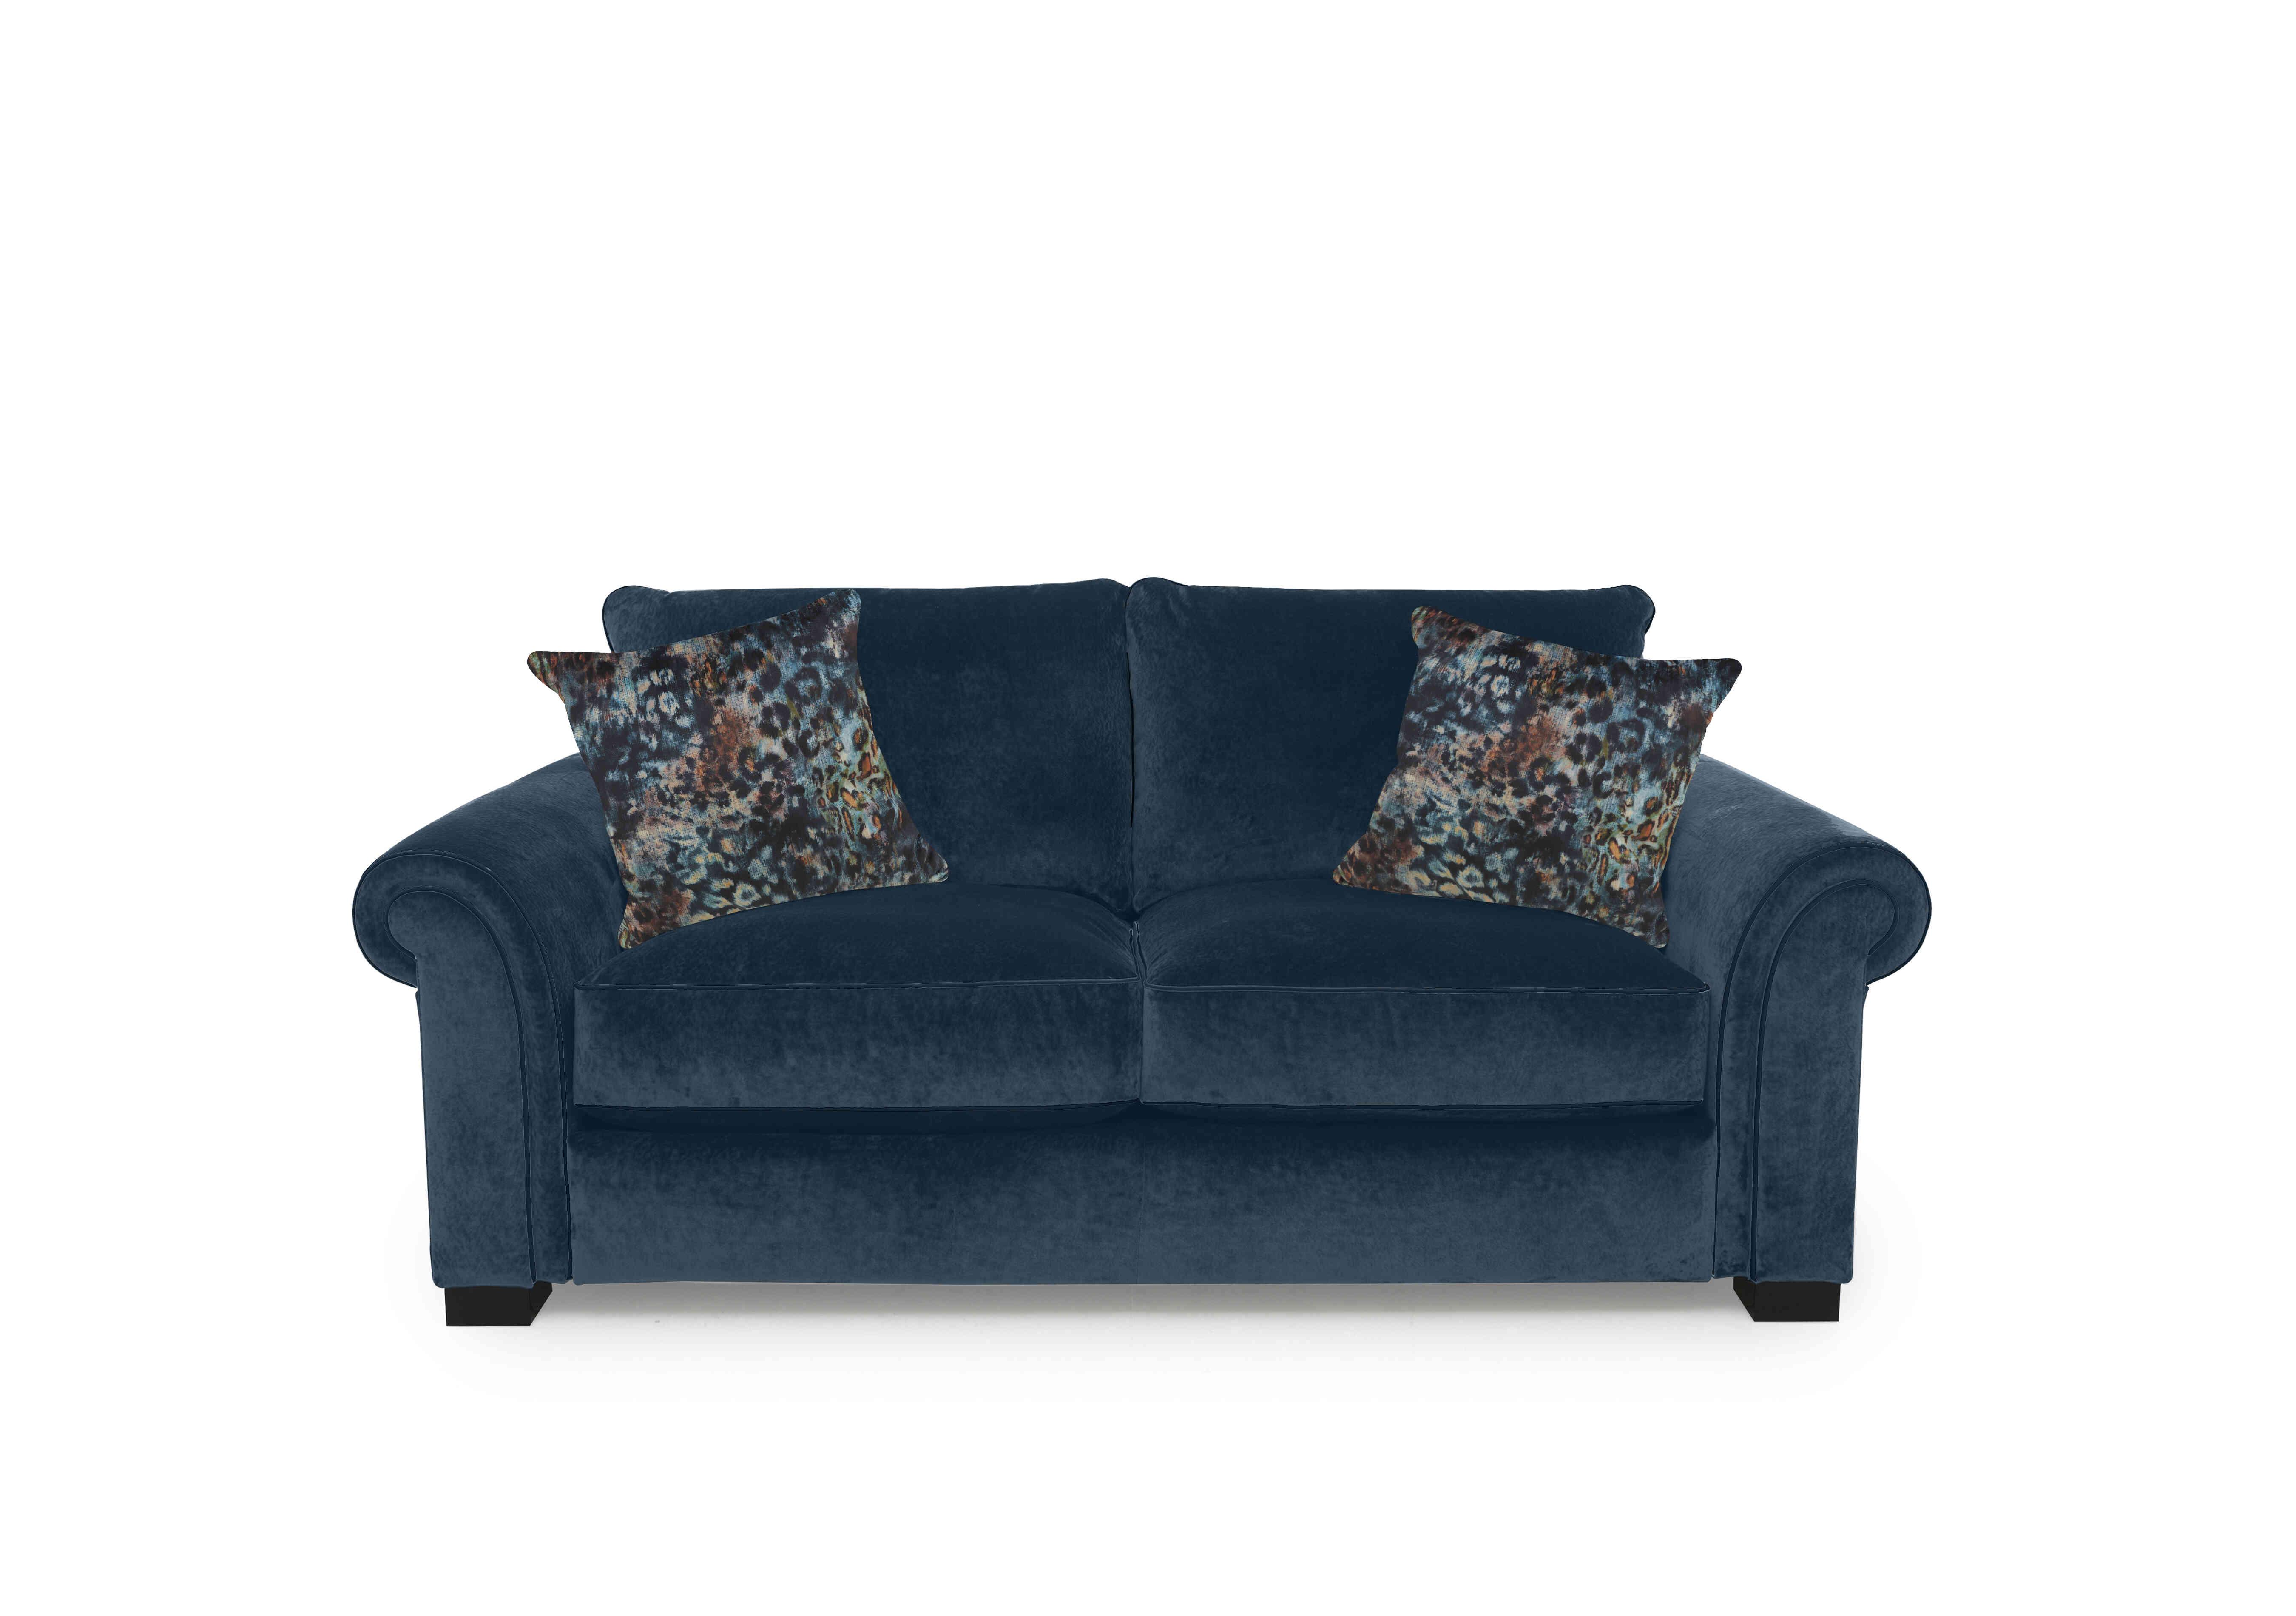 Modern Classics St James Park 2 Seater Sofa in Remini Petrol Blue Sp Mf on Furniture Village